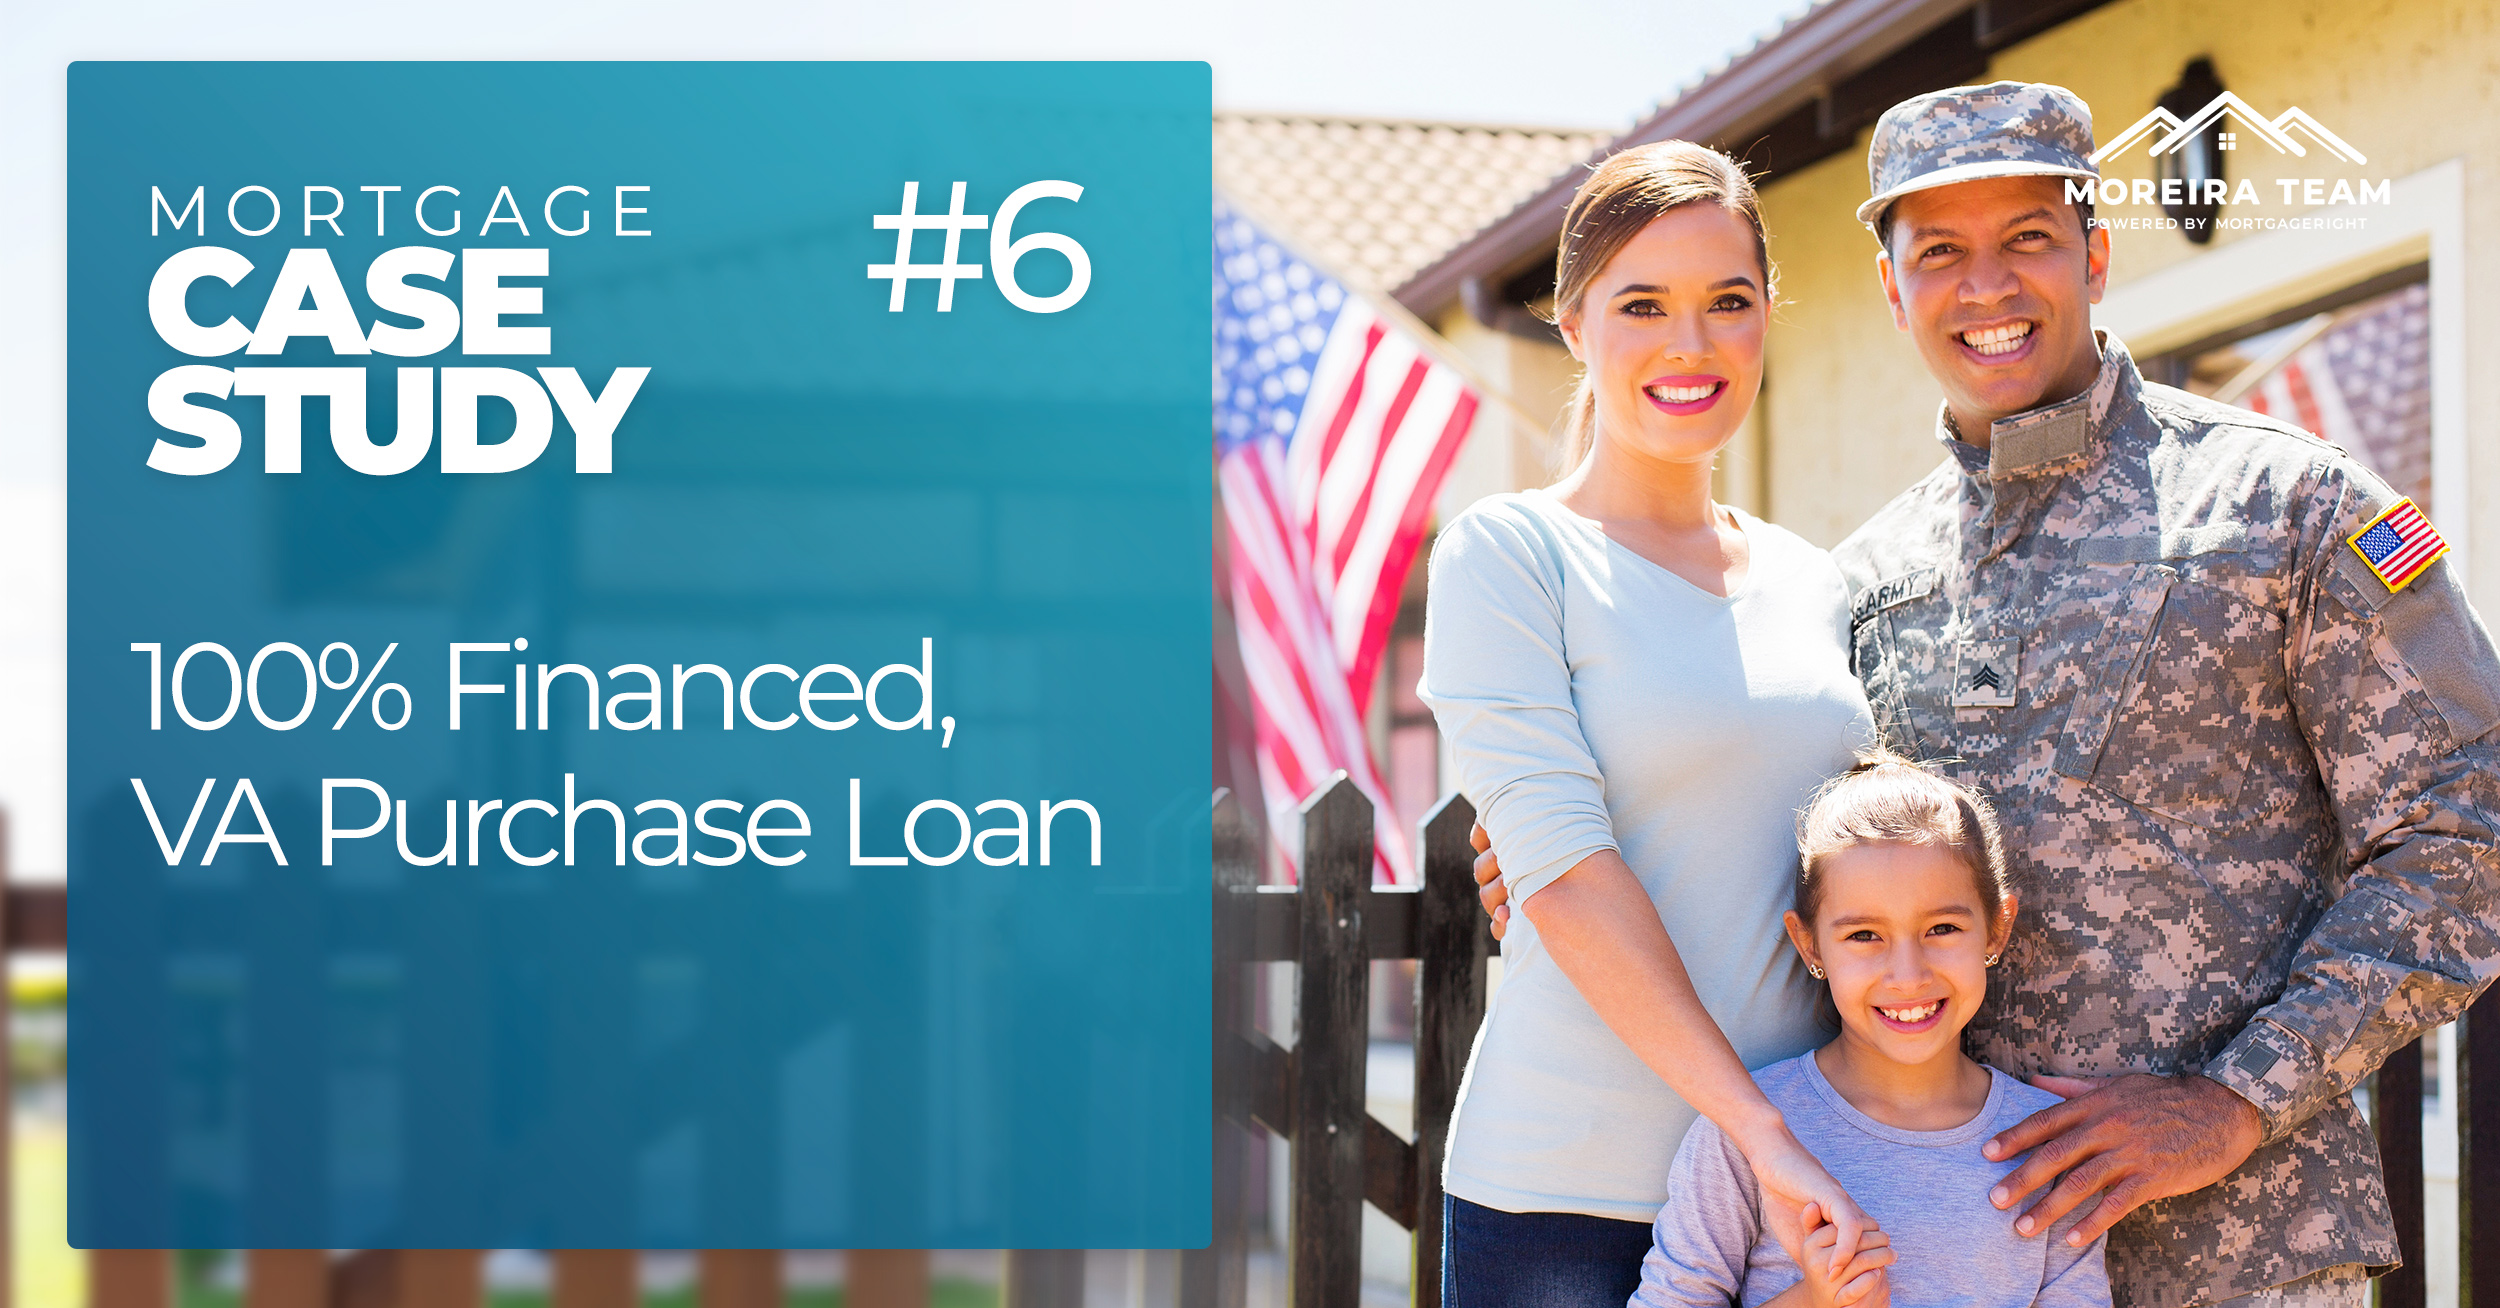 Mortgage Case Study - 100% Financed, VA Purchase Loan